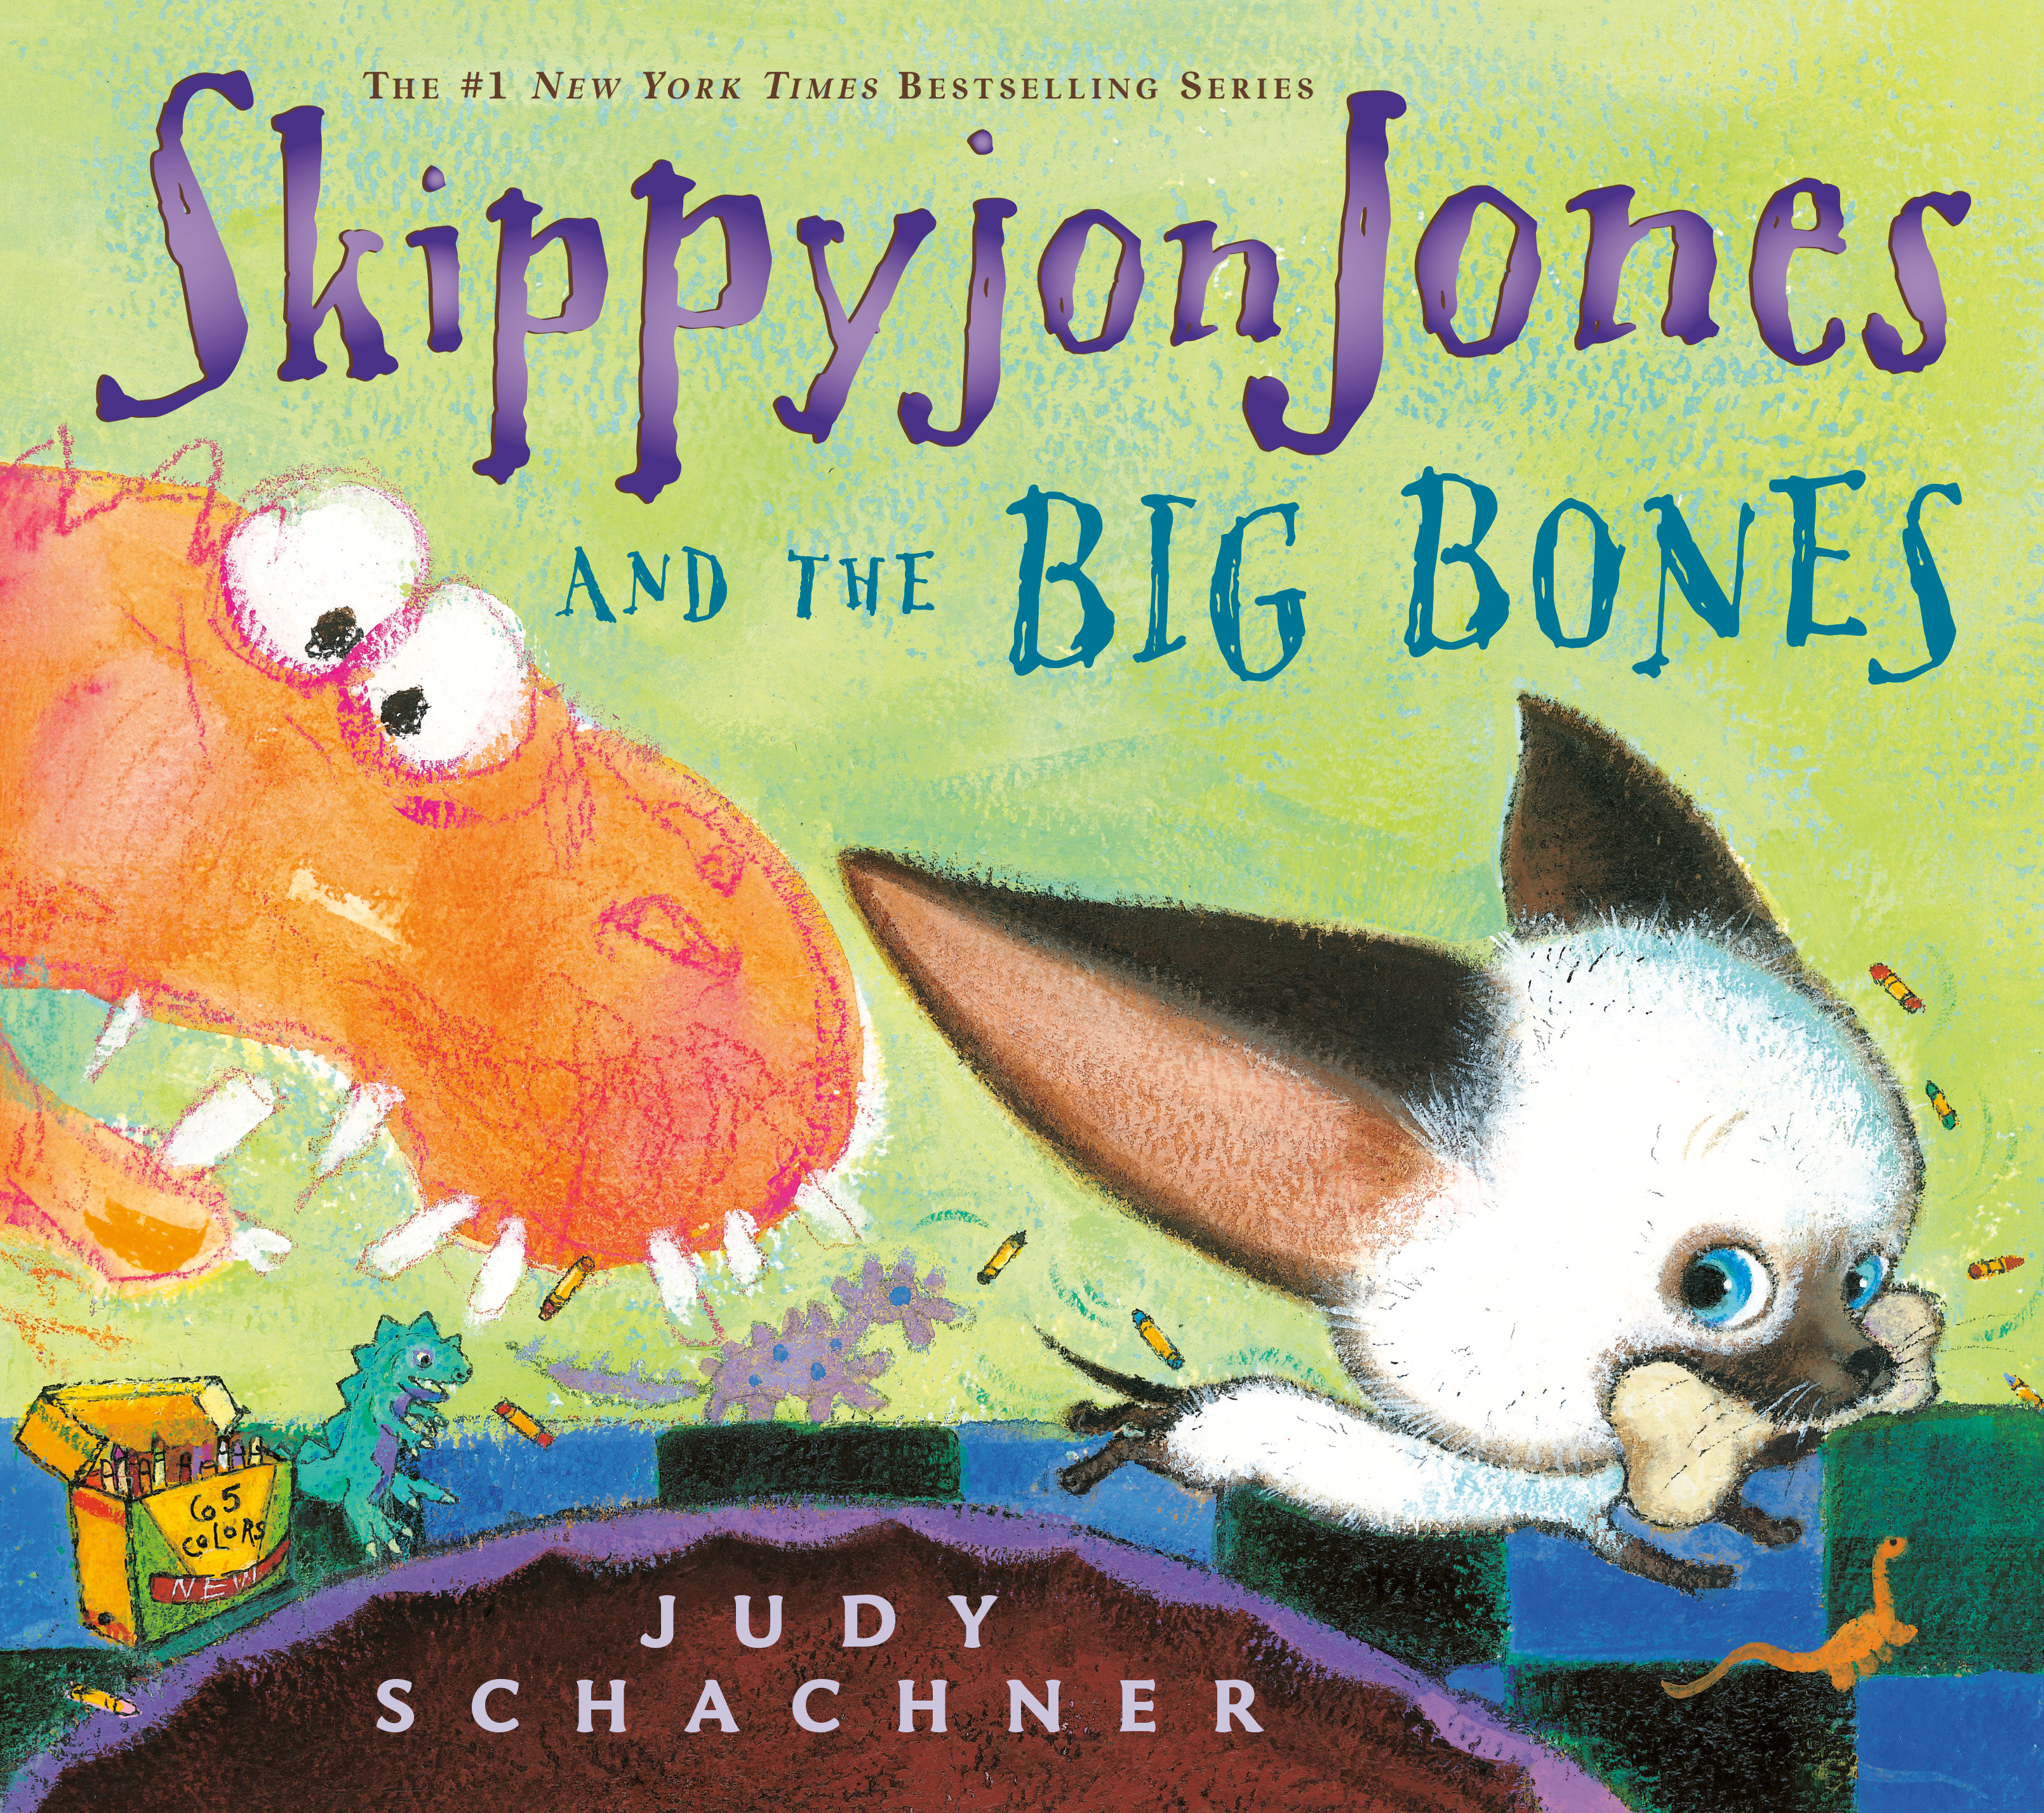 Skippyjon Jones and the Big Bones (Hardcover Book)